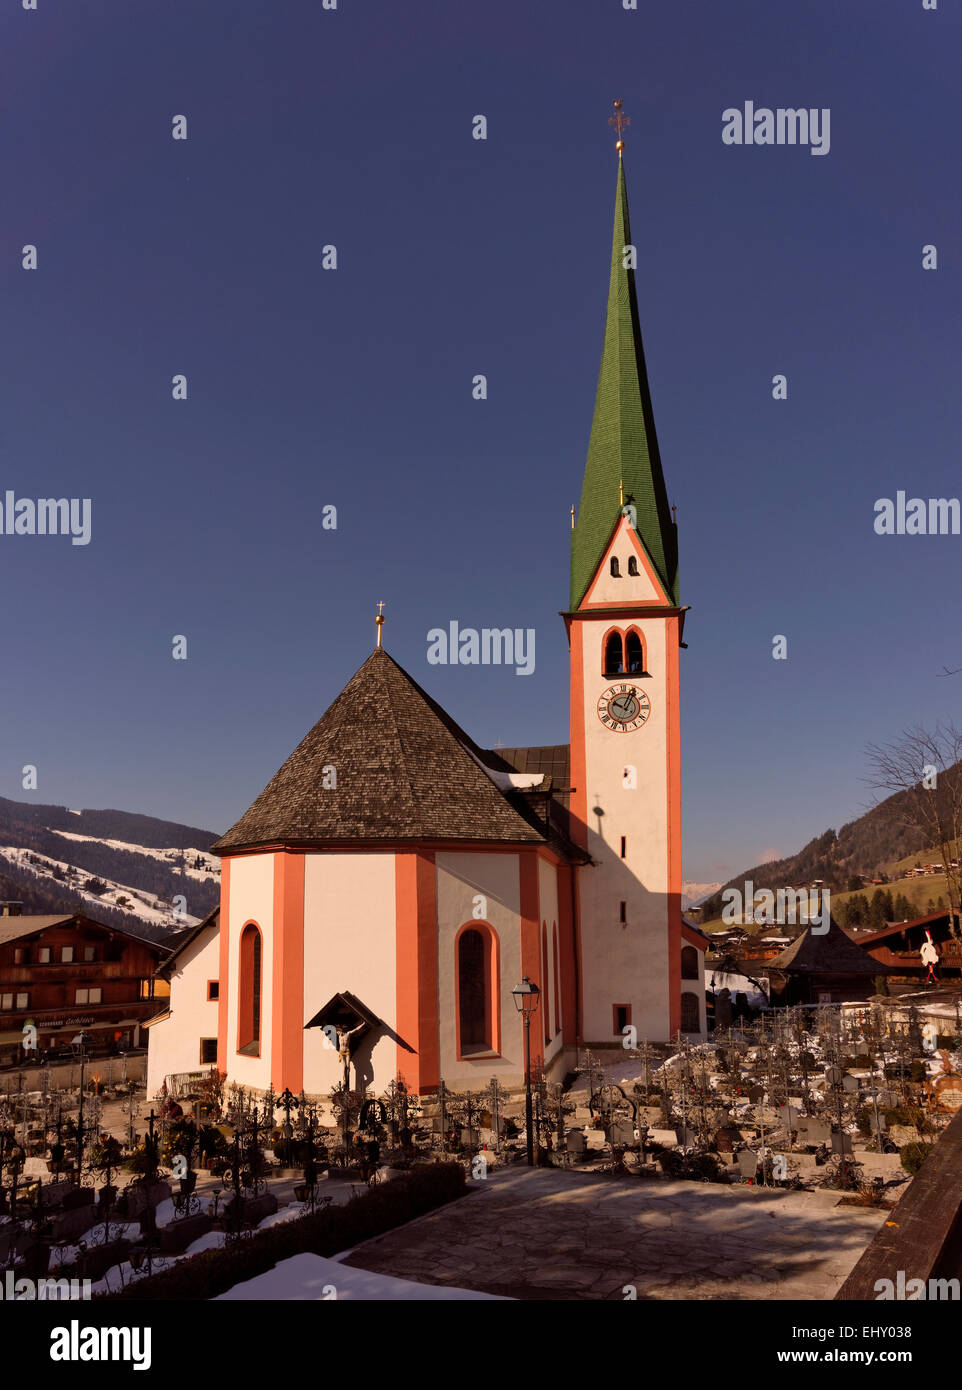 St Oswald's Church in Alpbach village, Tyrol region of Austria. Austria's prettiest village and well known ski resort. Stock Photo